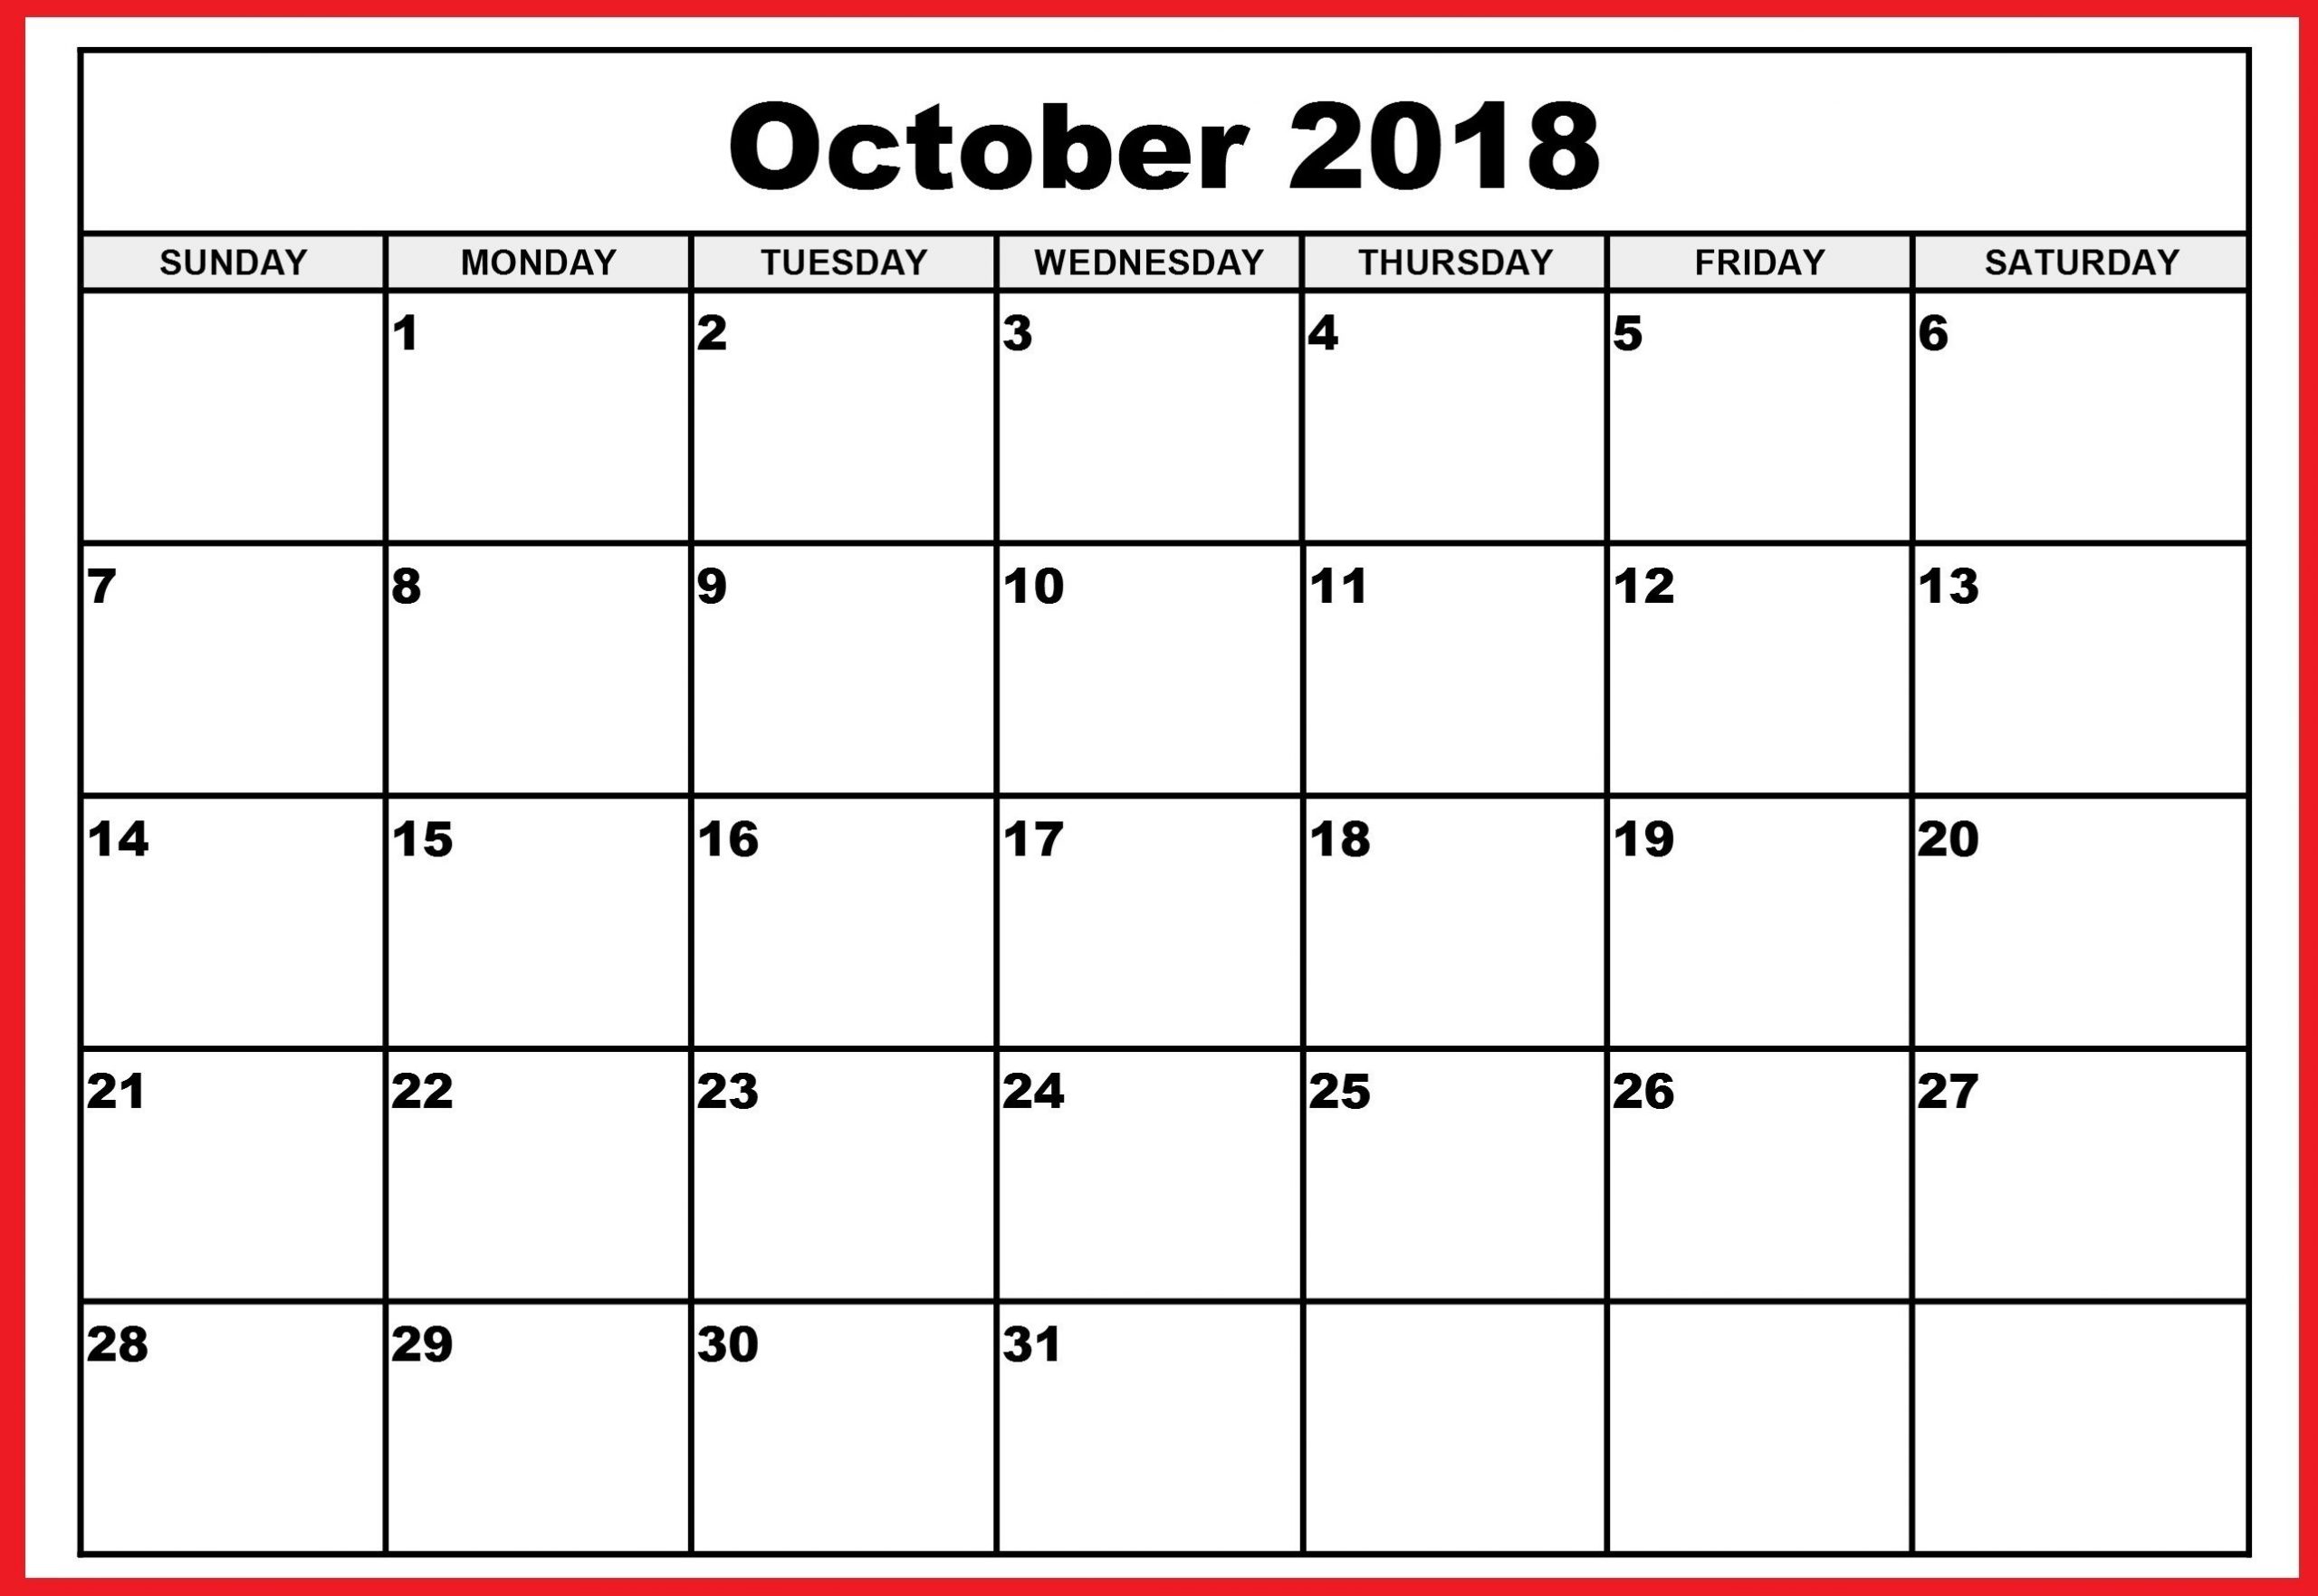 Monthly October 2018 Calendar | Calendar October 2018 | Free Calendar Month Of October